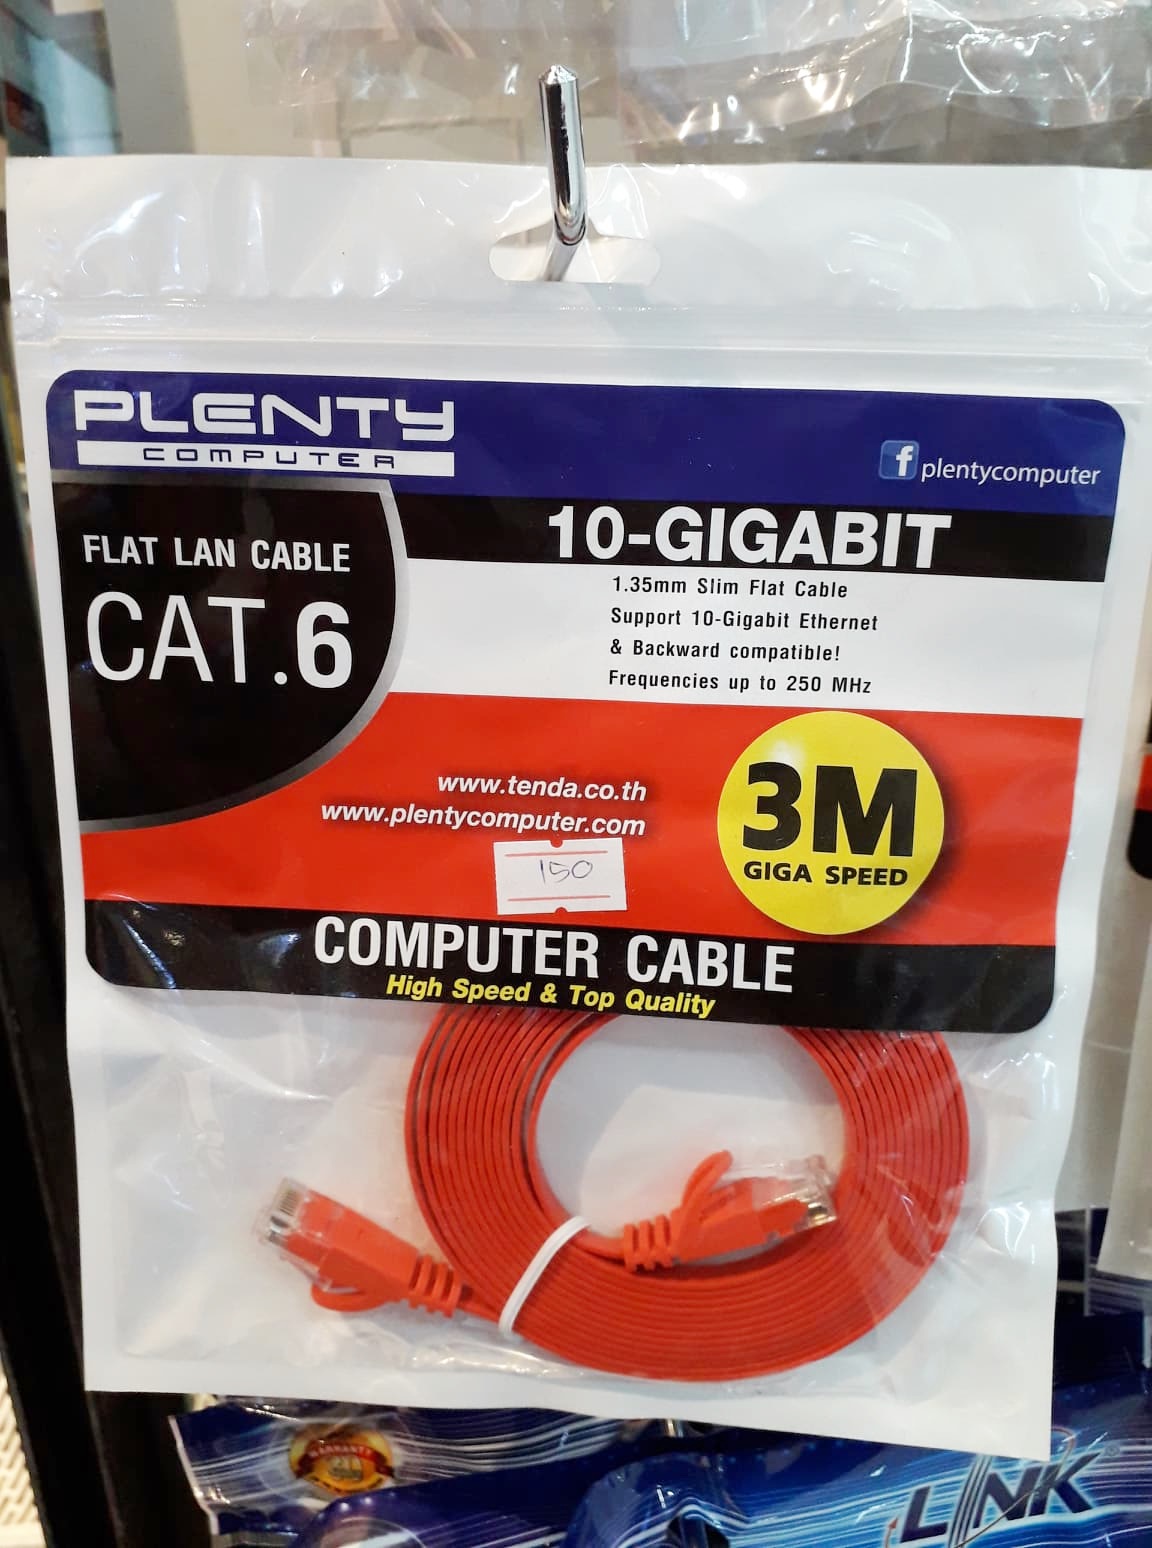 108Connect จำหน่าย Router อุปกรณ์เน็ตเวิร์คไร้สายทุกชนิด ราคาถูก  รับประกันสินค้าทุกชิ้น - Plenty Pllancat6Rd03 Flat Lan Cable Cat6 10-Gigabit  ความยาว 3 เมตร/สีแดง